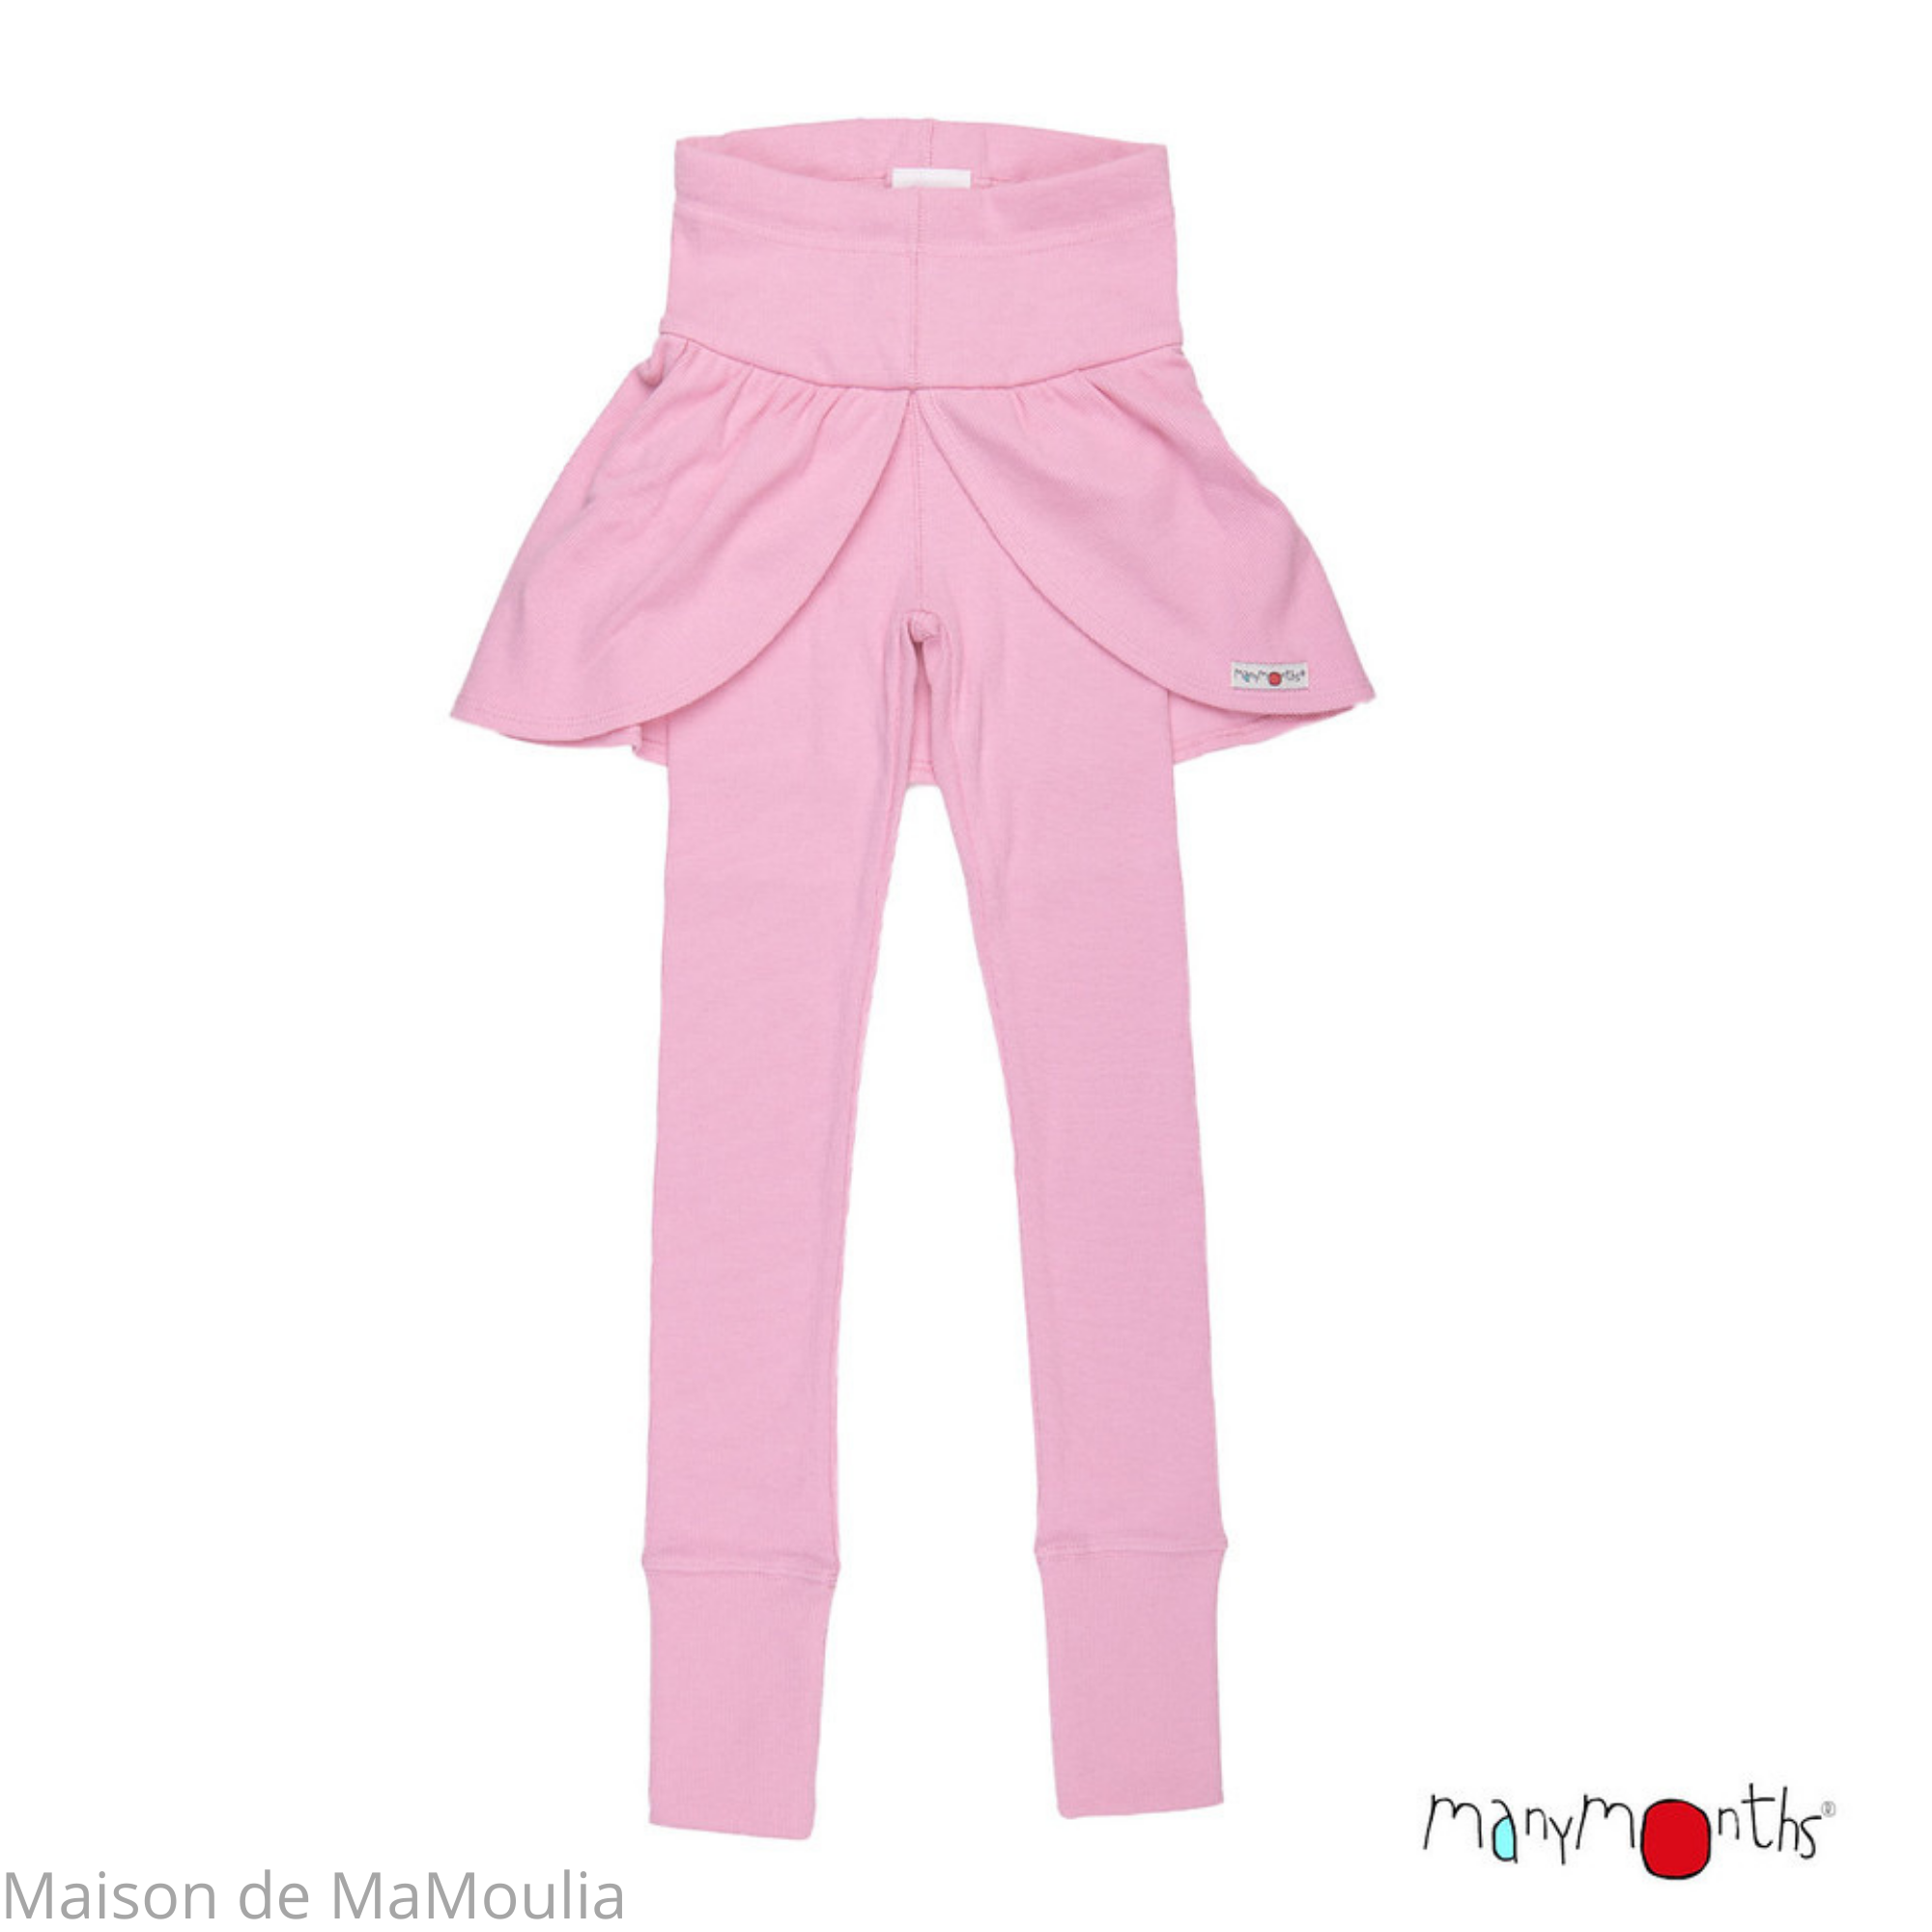 pantalon-papillon-legging-ajustable-evolutif-bebe-enfant-coton-bio-chanvre-manymonths-babyidea-maison-de-mamoulia-rose-orchidee